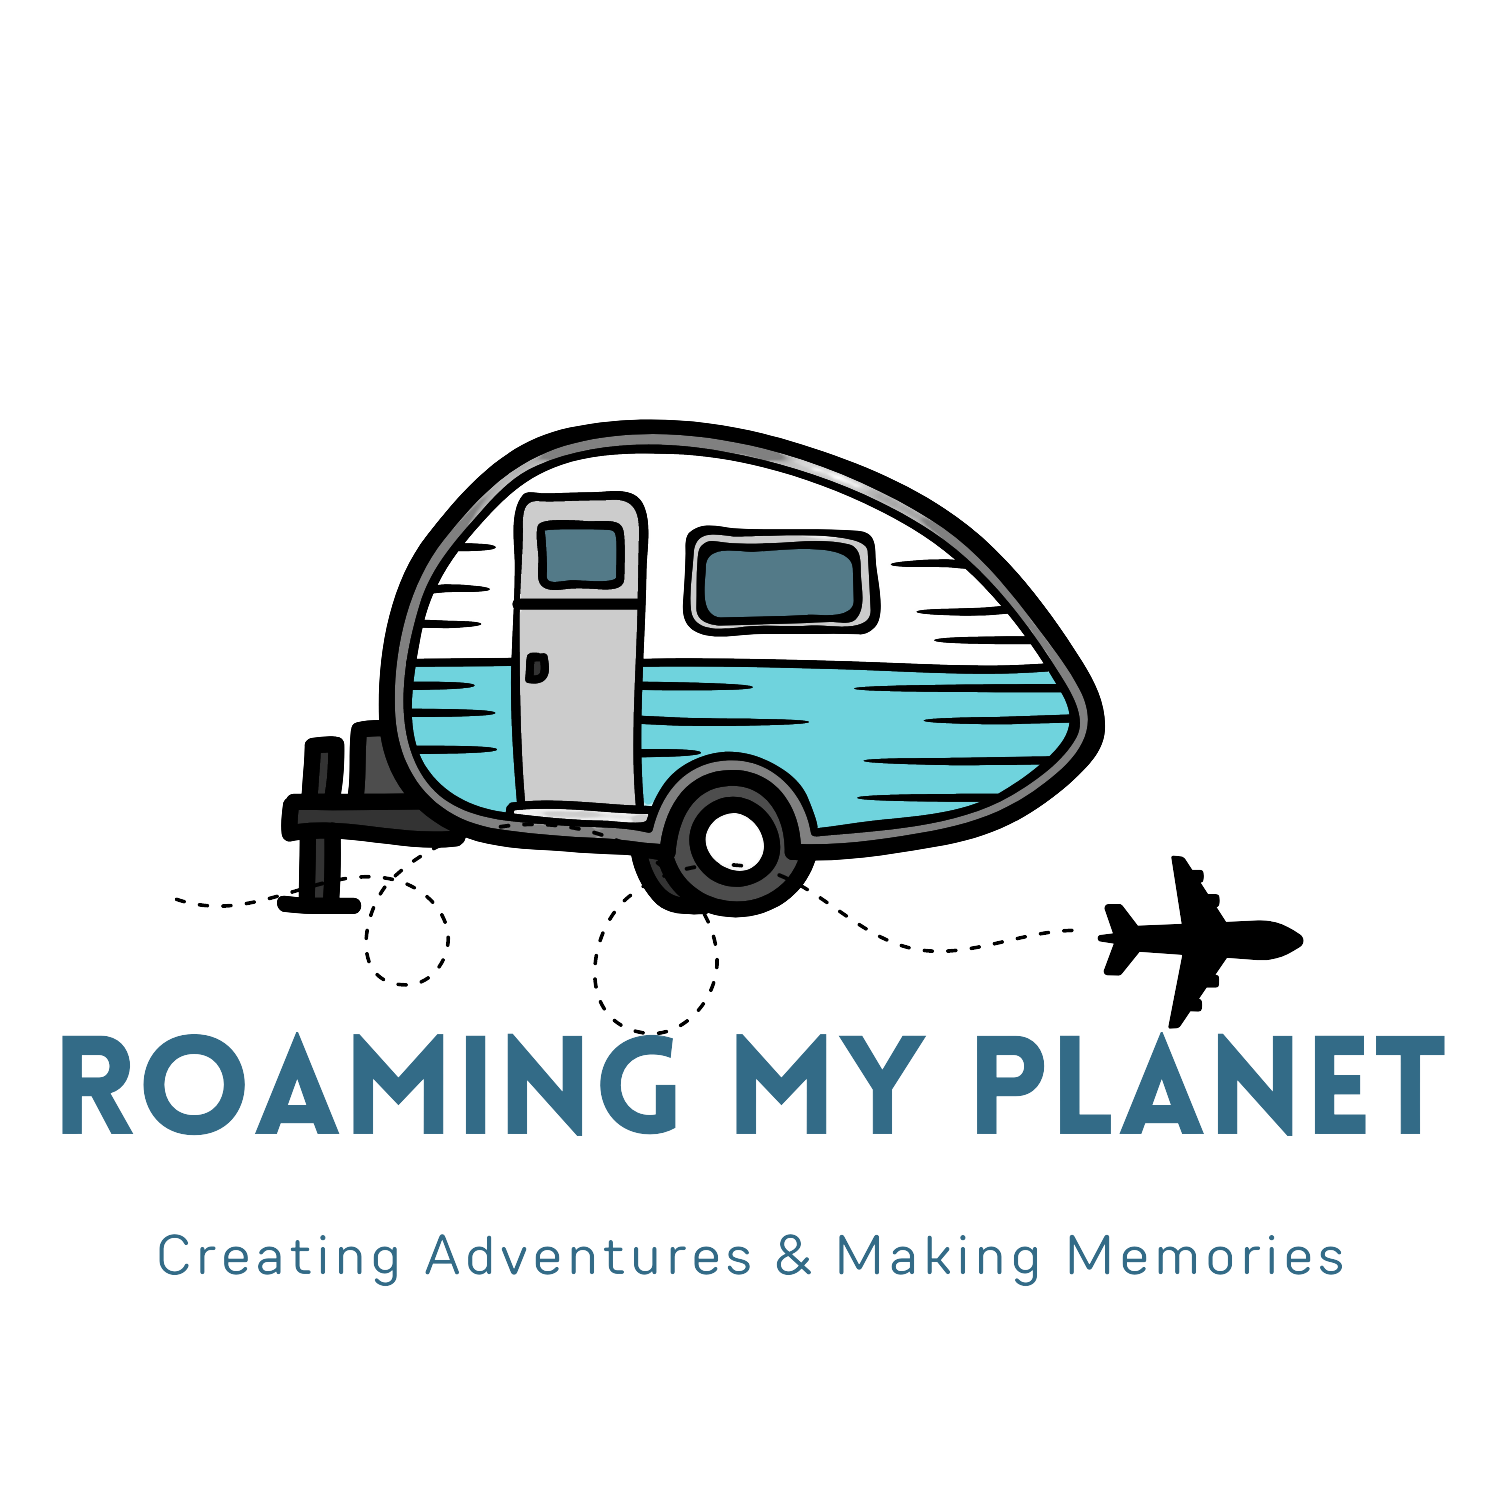 RoamingMyPlanet Logo 2 - Edited